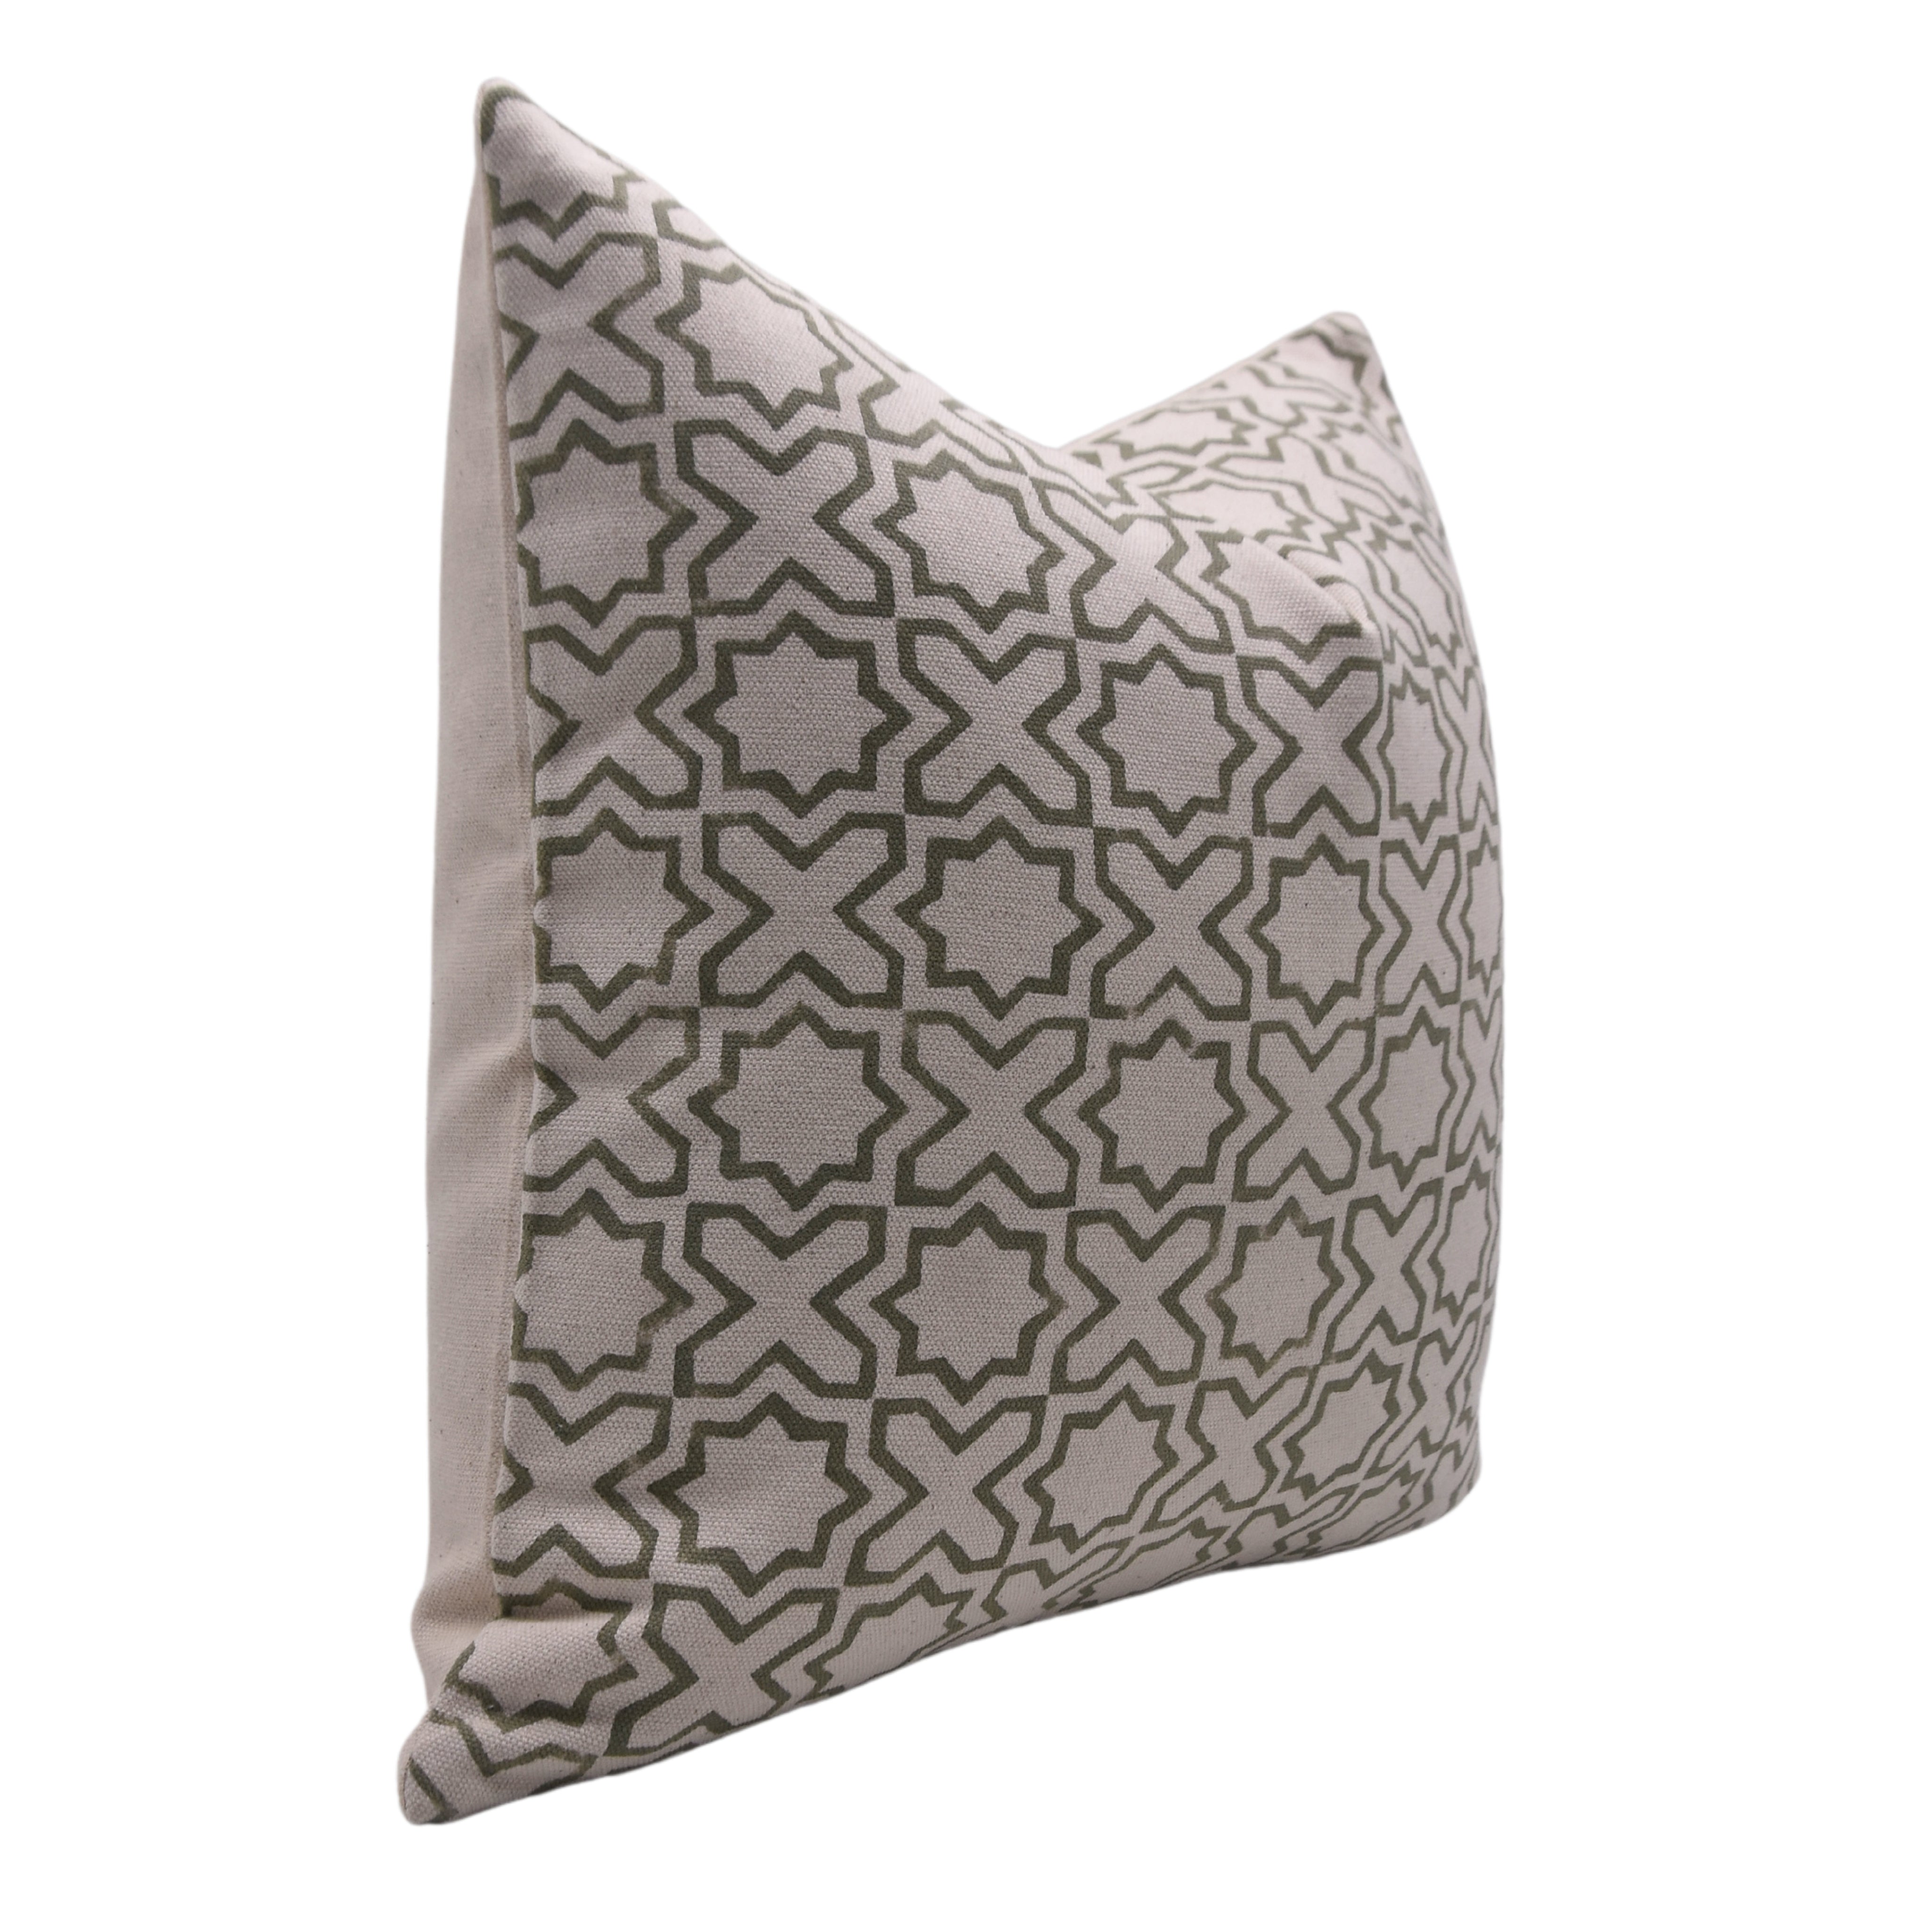 Block print Pillow Cover - Fabdivine